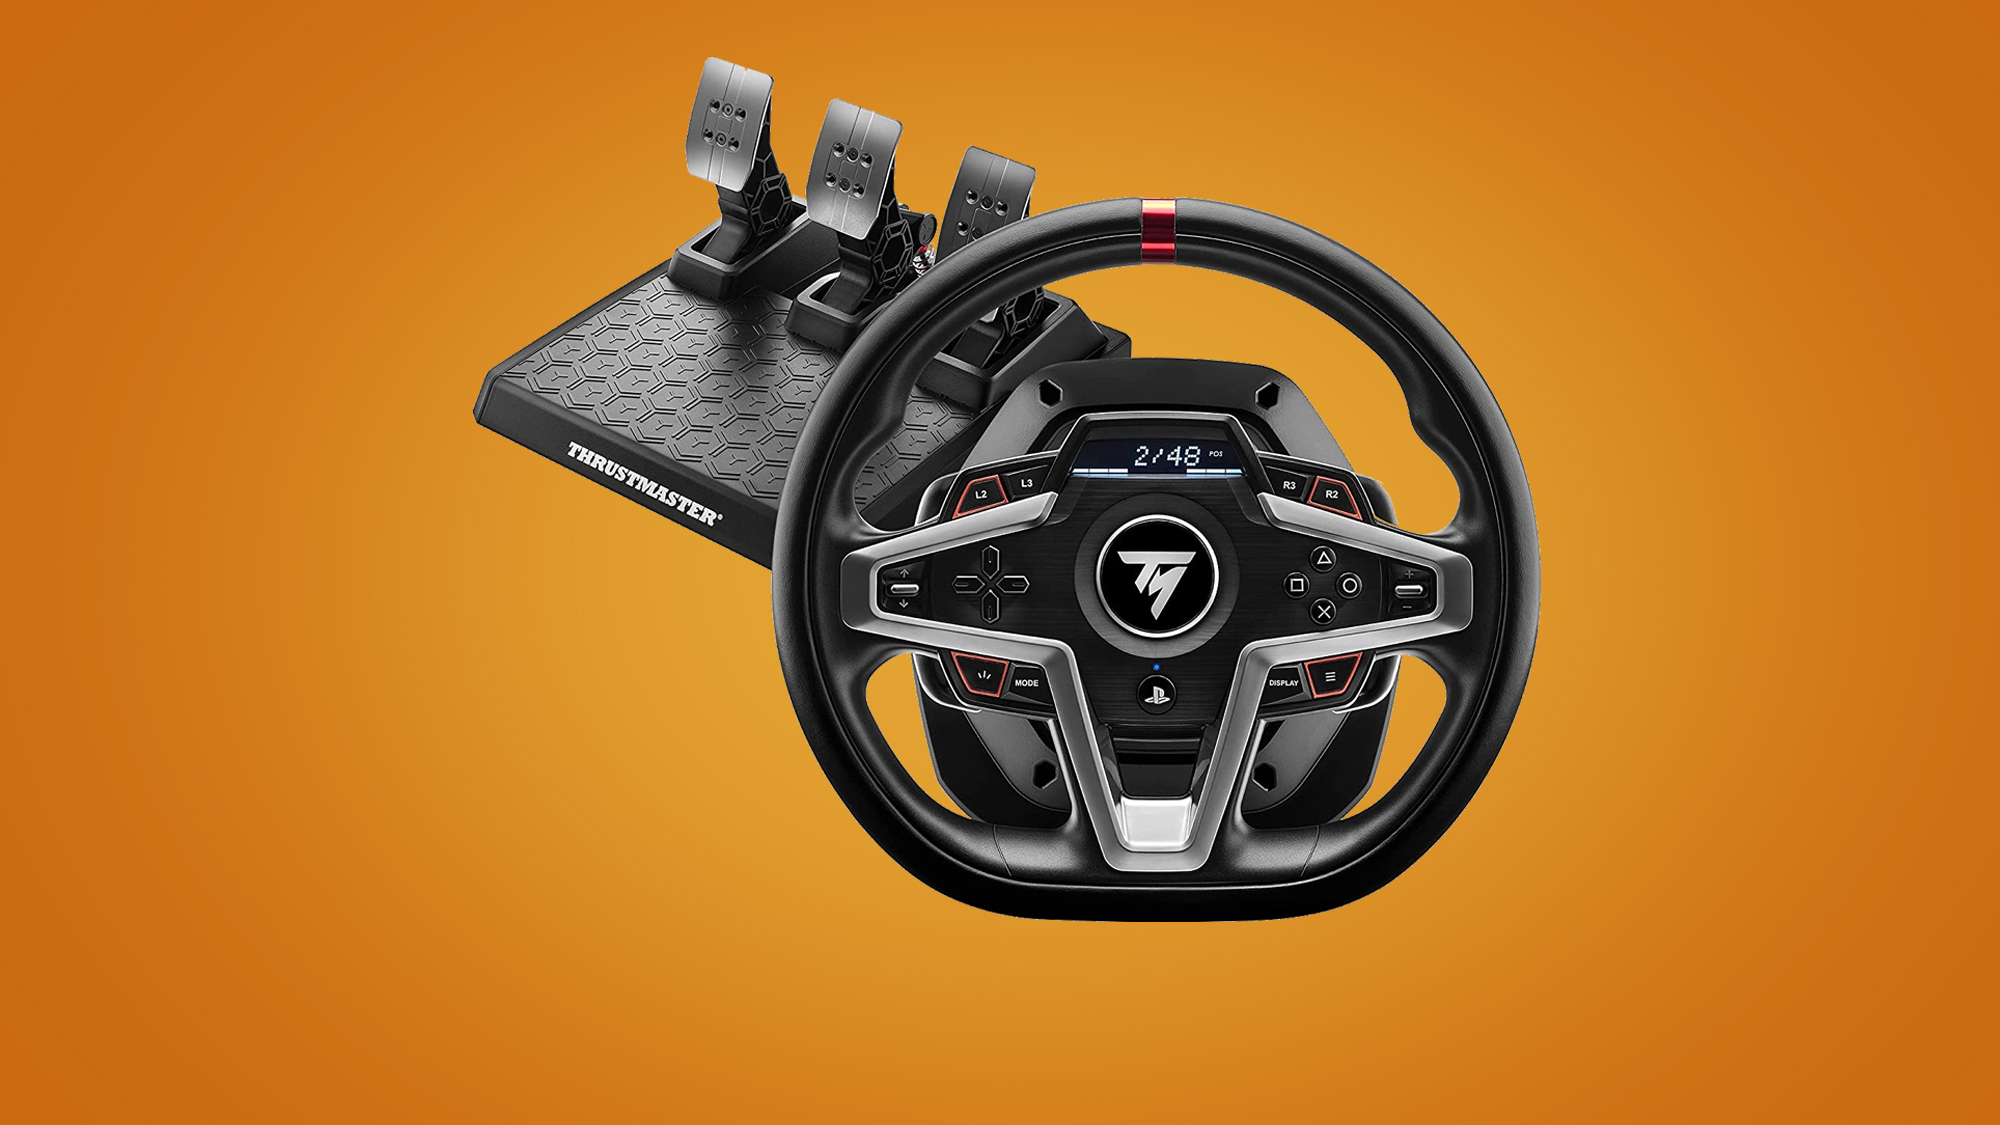 Thrustmaster T248 Steering Wheel Review